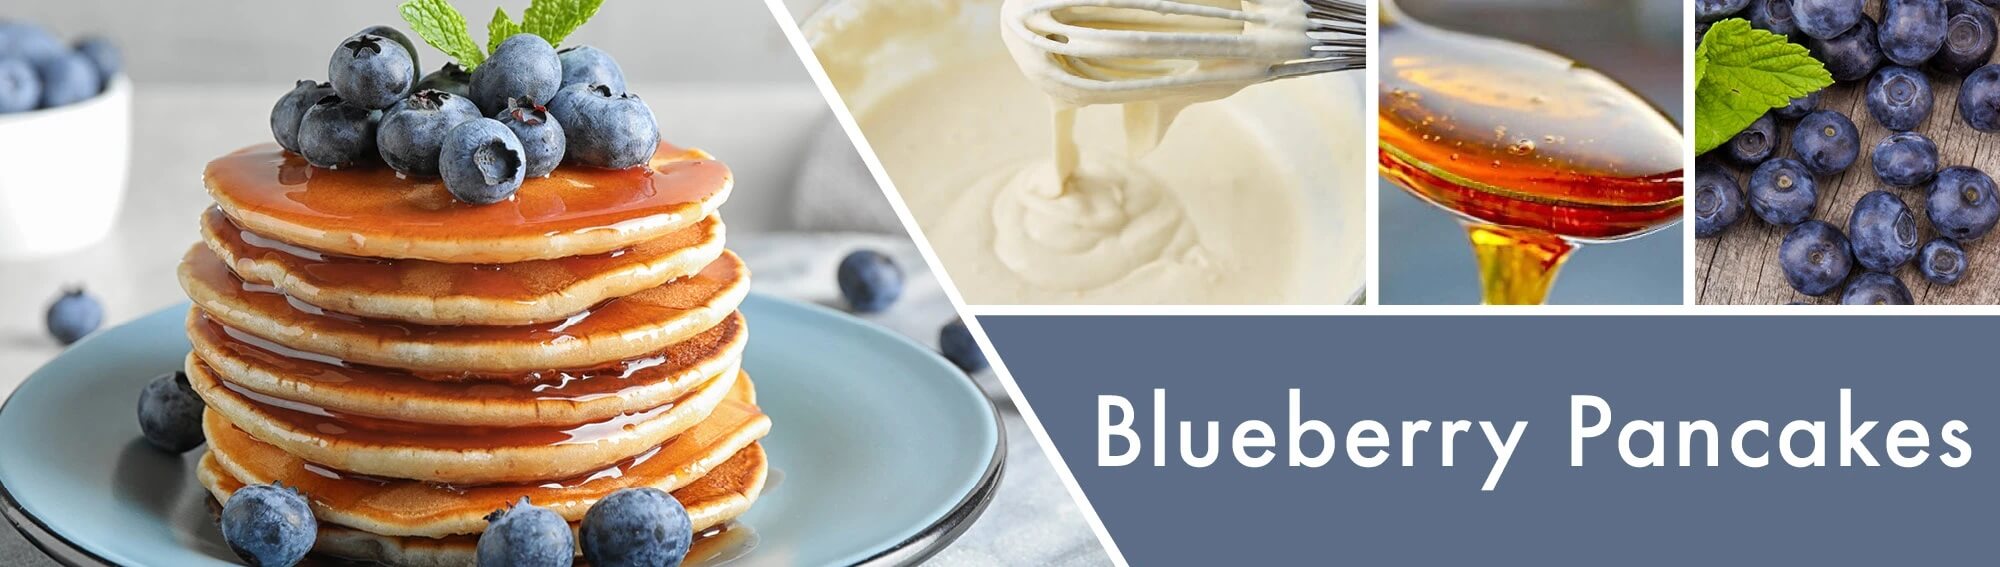 Blueberry-Pancakes-BannerziSfnC5Z8CHZ0